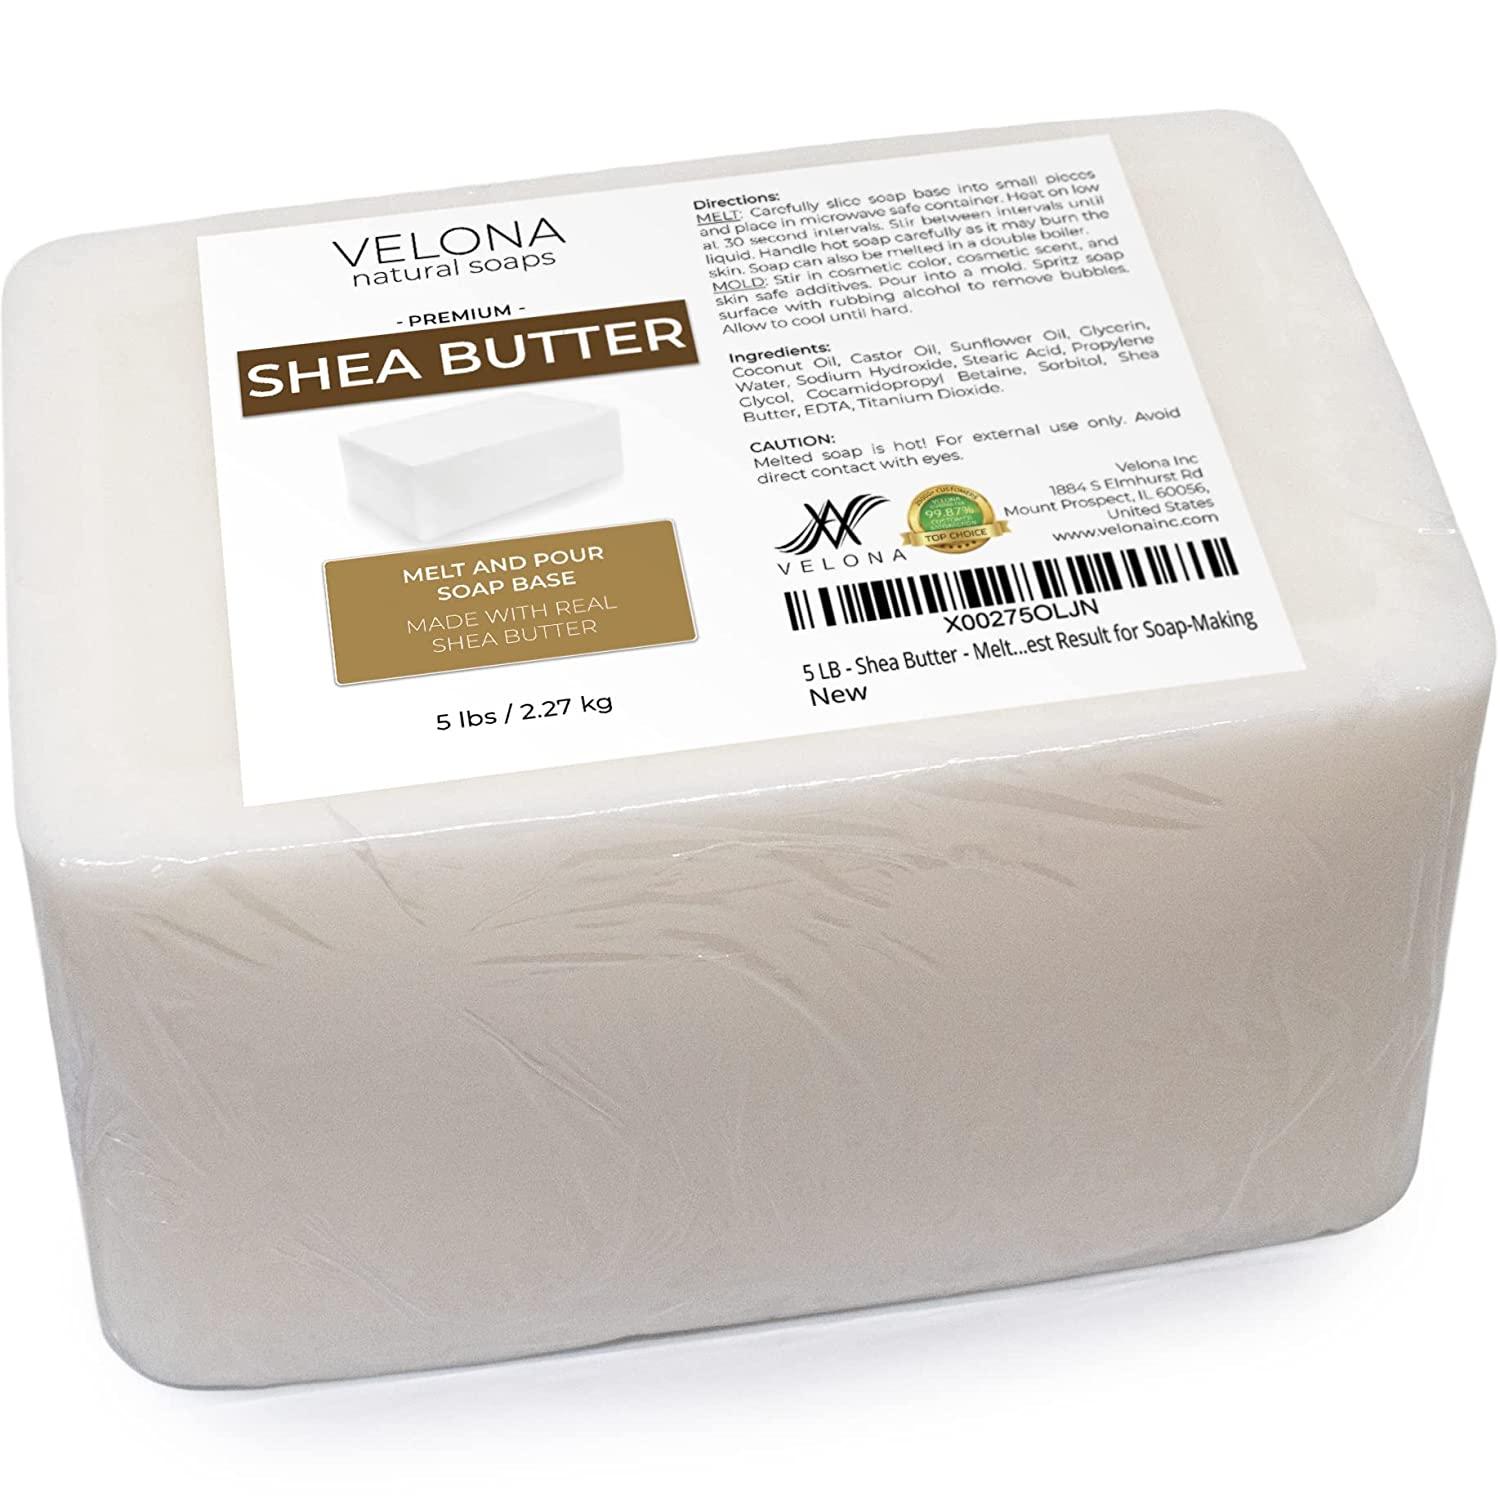 velona 10 LB - Shea Butter - Melt and Pour Soap Base SLS/SLES free |  Natural Bars for The Best Result for Soap-Making